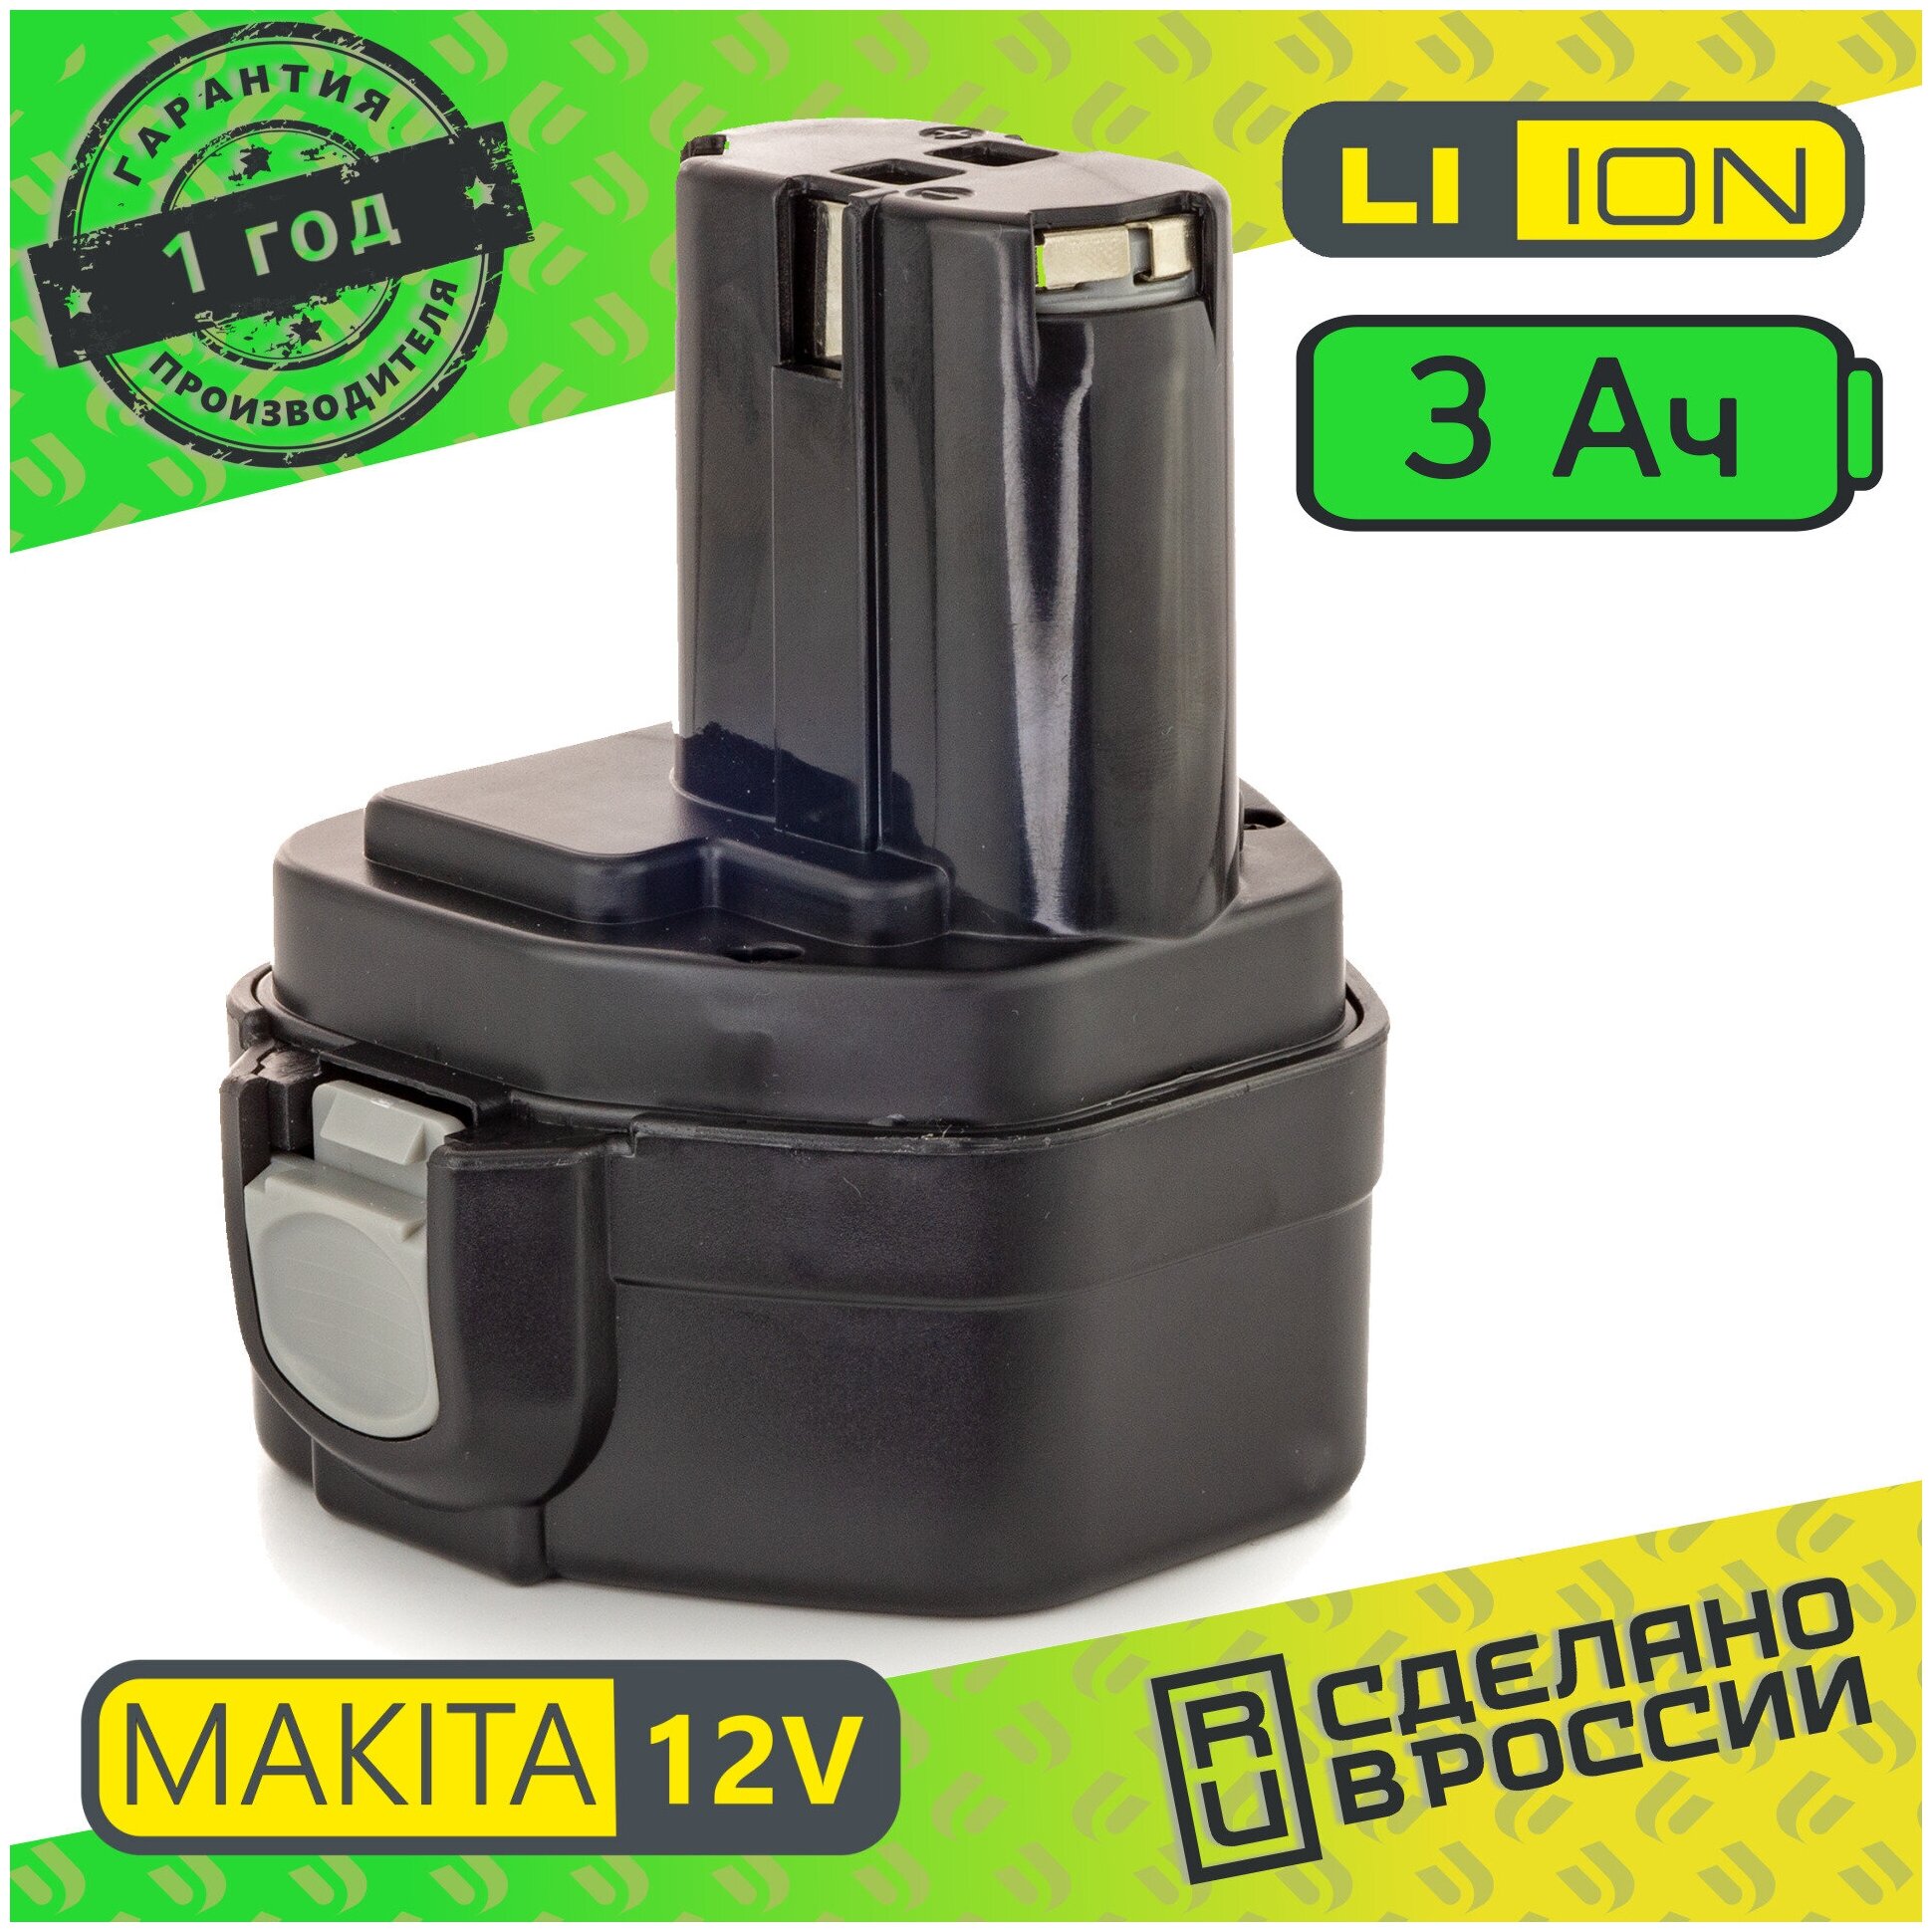 Аккумулятор для шуруповерта MAKITA PA12 Li-ion 12V 3.0 ah